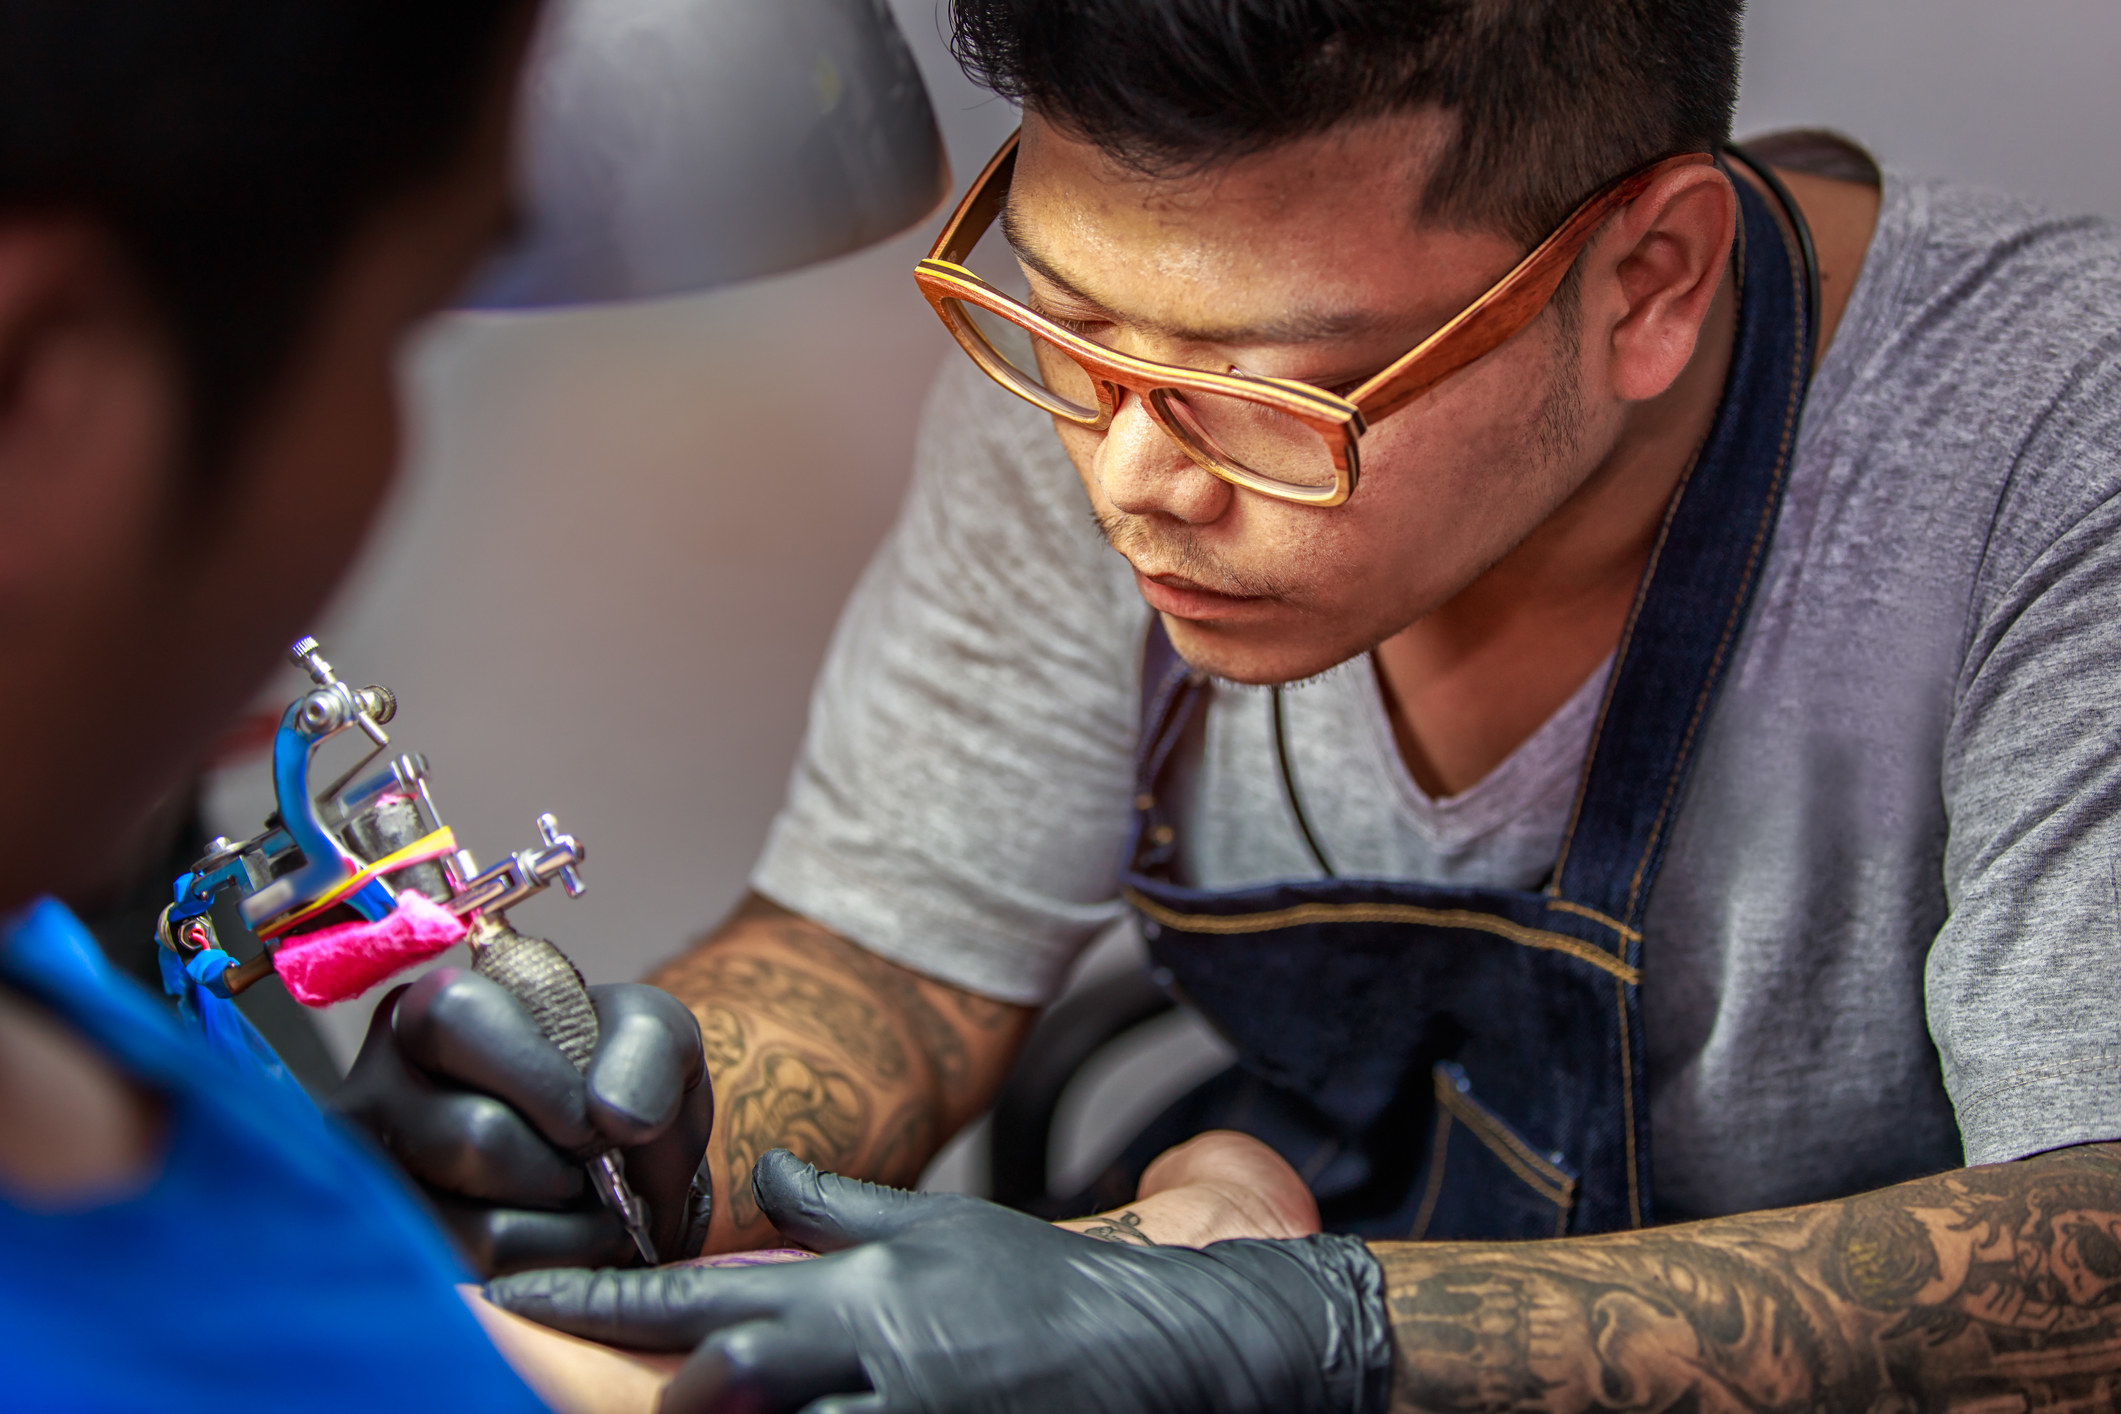 A tattoo artist working on a client